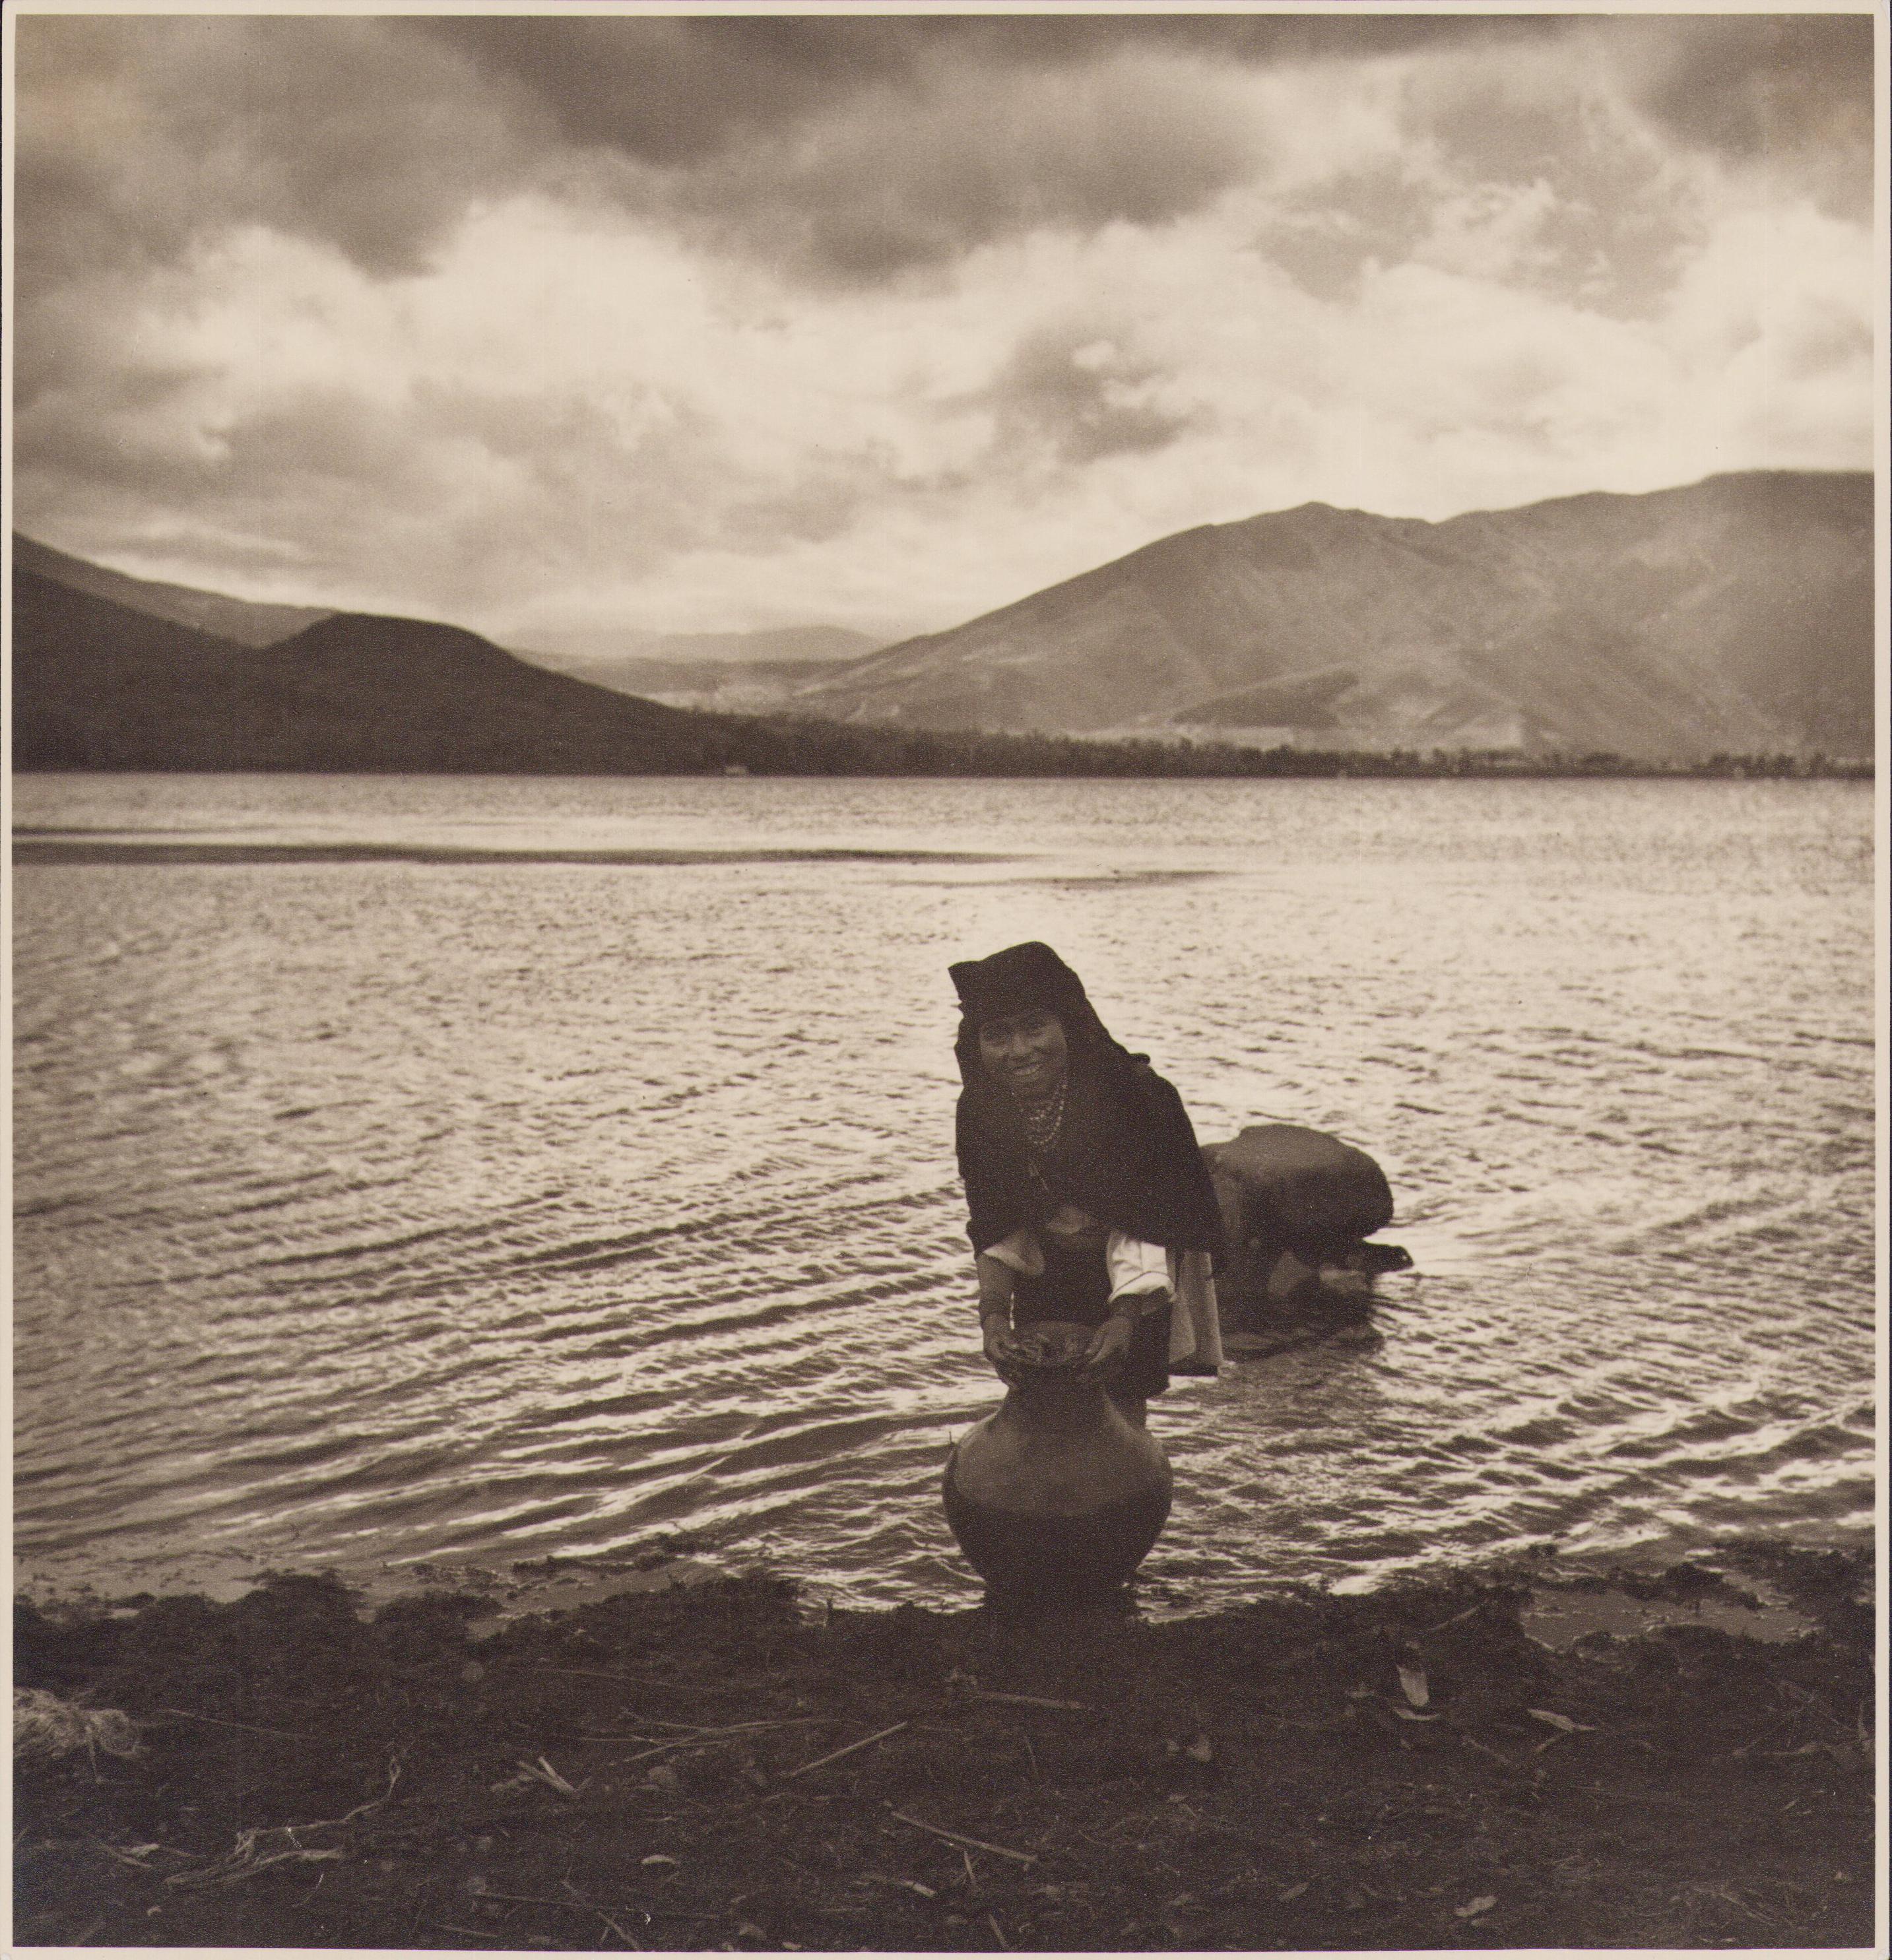 Hanna Seidel Portrait Photograph - Ecuador, Lake, Woman, Black and White Photography, 1960s, 24, 2 x 25 cm